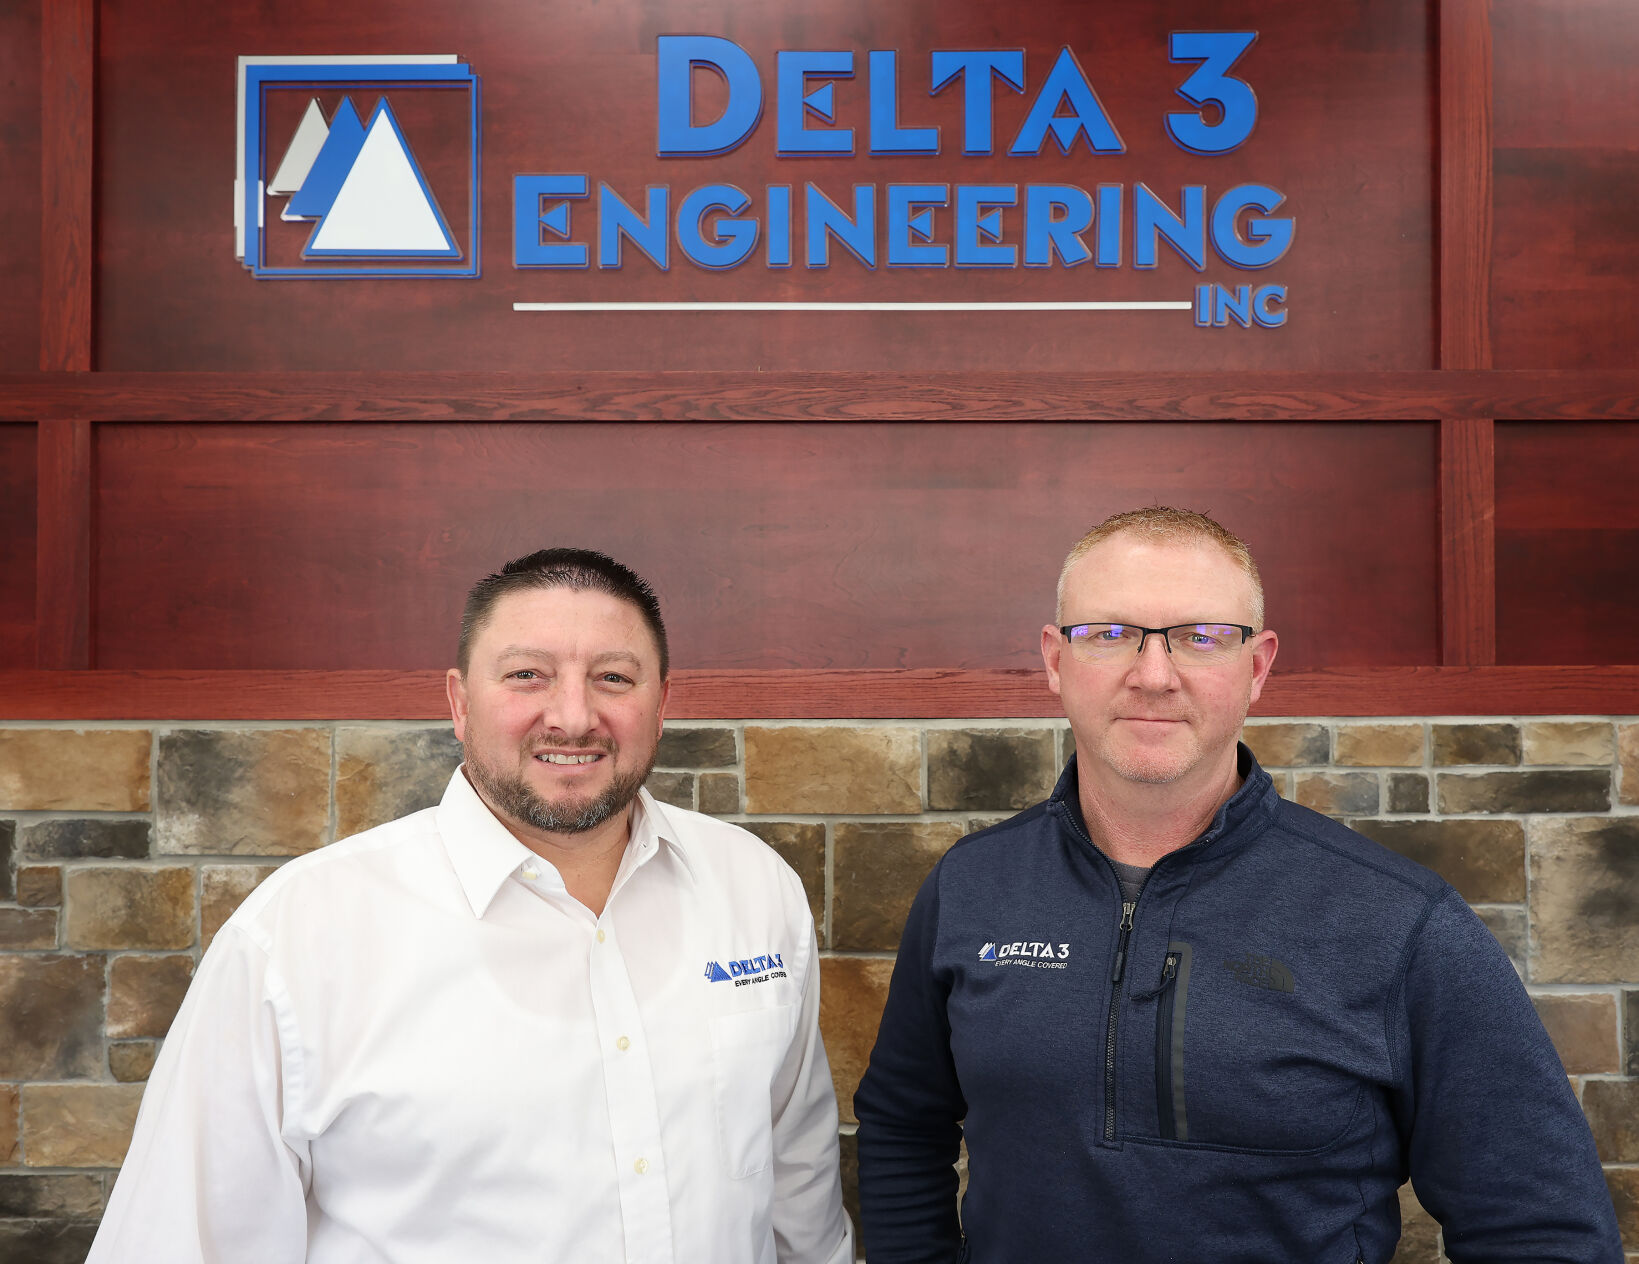 Delta 3 Engineering President Bart Nies (left) and Vice President Dan Dreessens.    PHOTO CREDIT: Stephen Gassman
Telegraph Herald